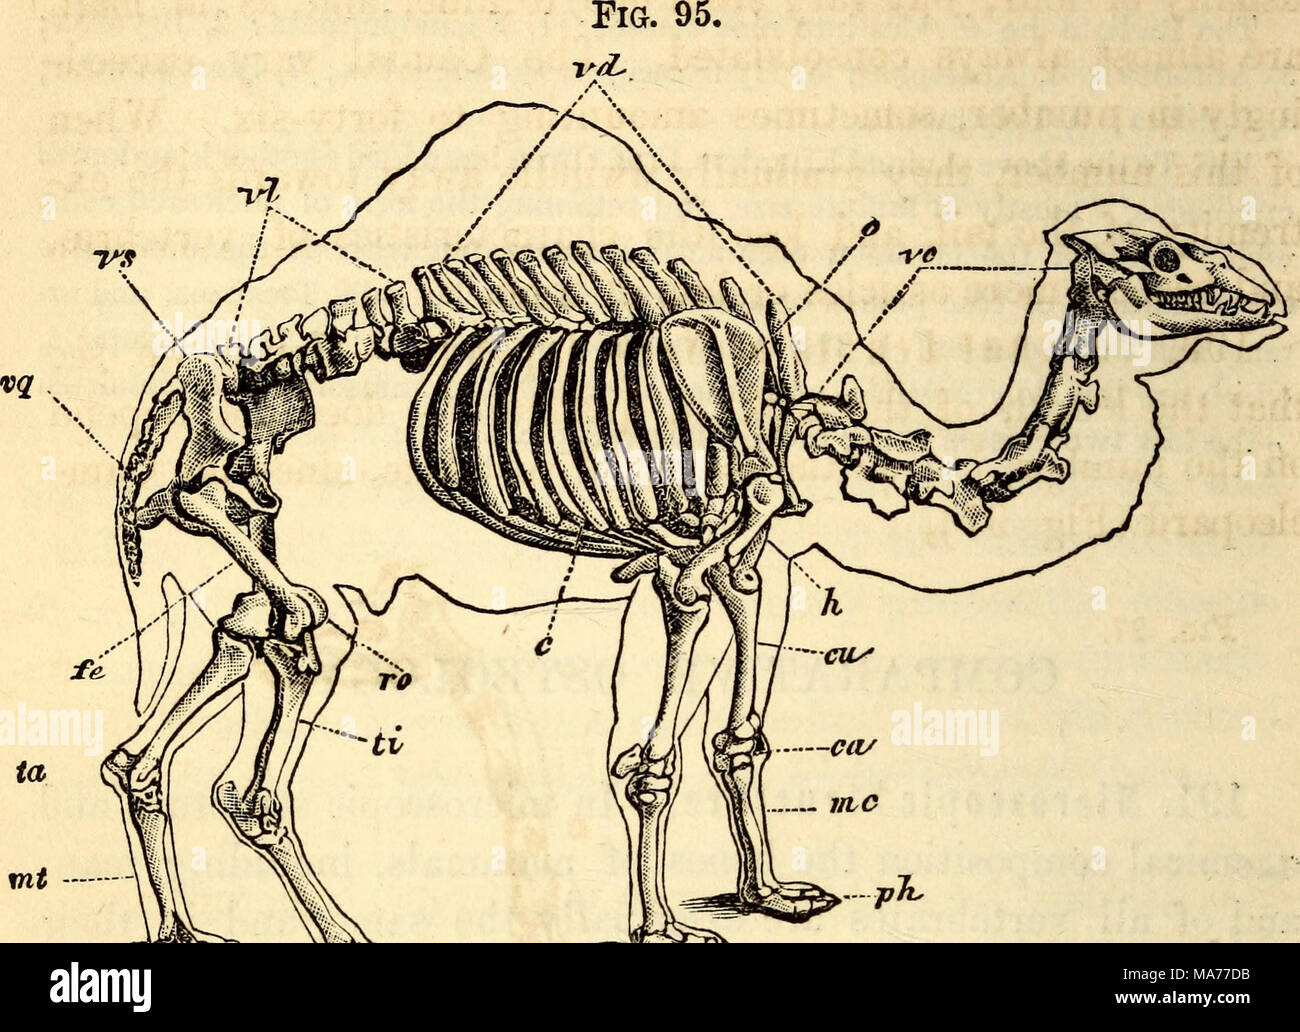 . Elementary anatomy and physiology : for colleges, academies, and other schools . Skeleton of the Camel. c. Cervical Vertebra*. «. d. Dorsal Vertebra. * h bar Vertebra*. 8. Sacral Vertebras. *. f. Caudal Vertebra, o. Scapula, h. I rus. c. Ribs. cu. Ulna. ca. Carpus, m. c. Metacarpus, ph. Phalanges, fe. b ro. Patella, ti. Tibia, fa. Tarsus, m, t. Metatarsus, cl. Clavicle. Fig. 96. Stock Photo